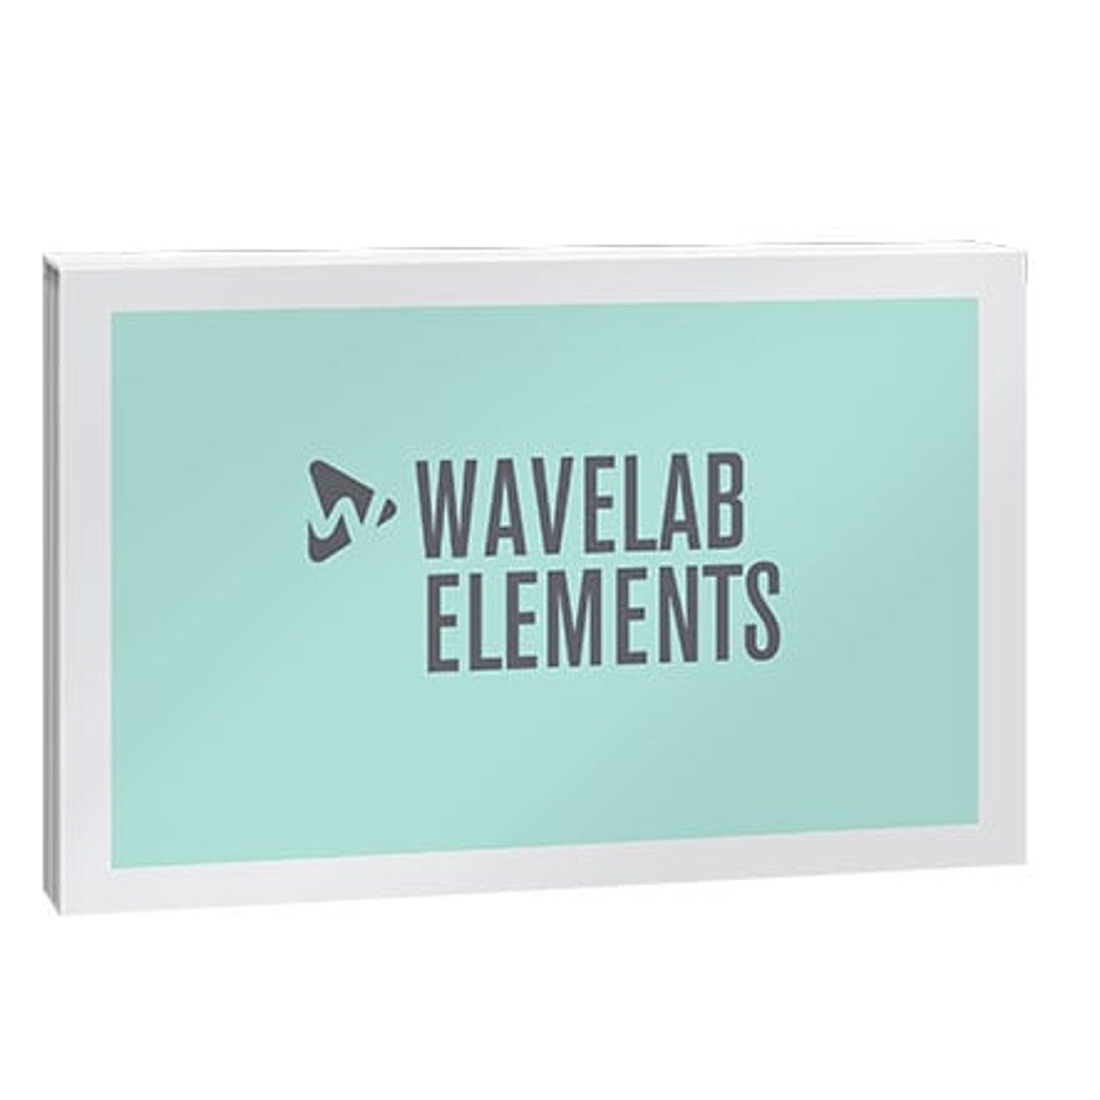 steinberg WAVELAB ELEMENTS start Inver g wave labo package version limitation special price goods 